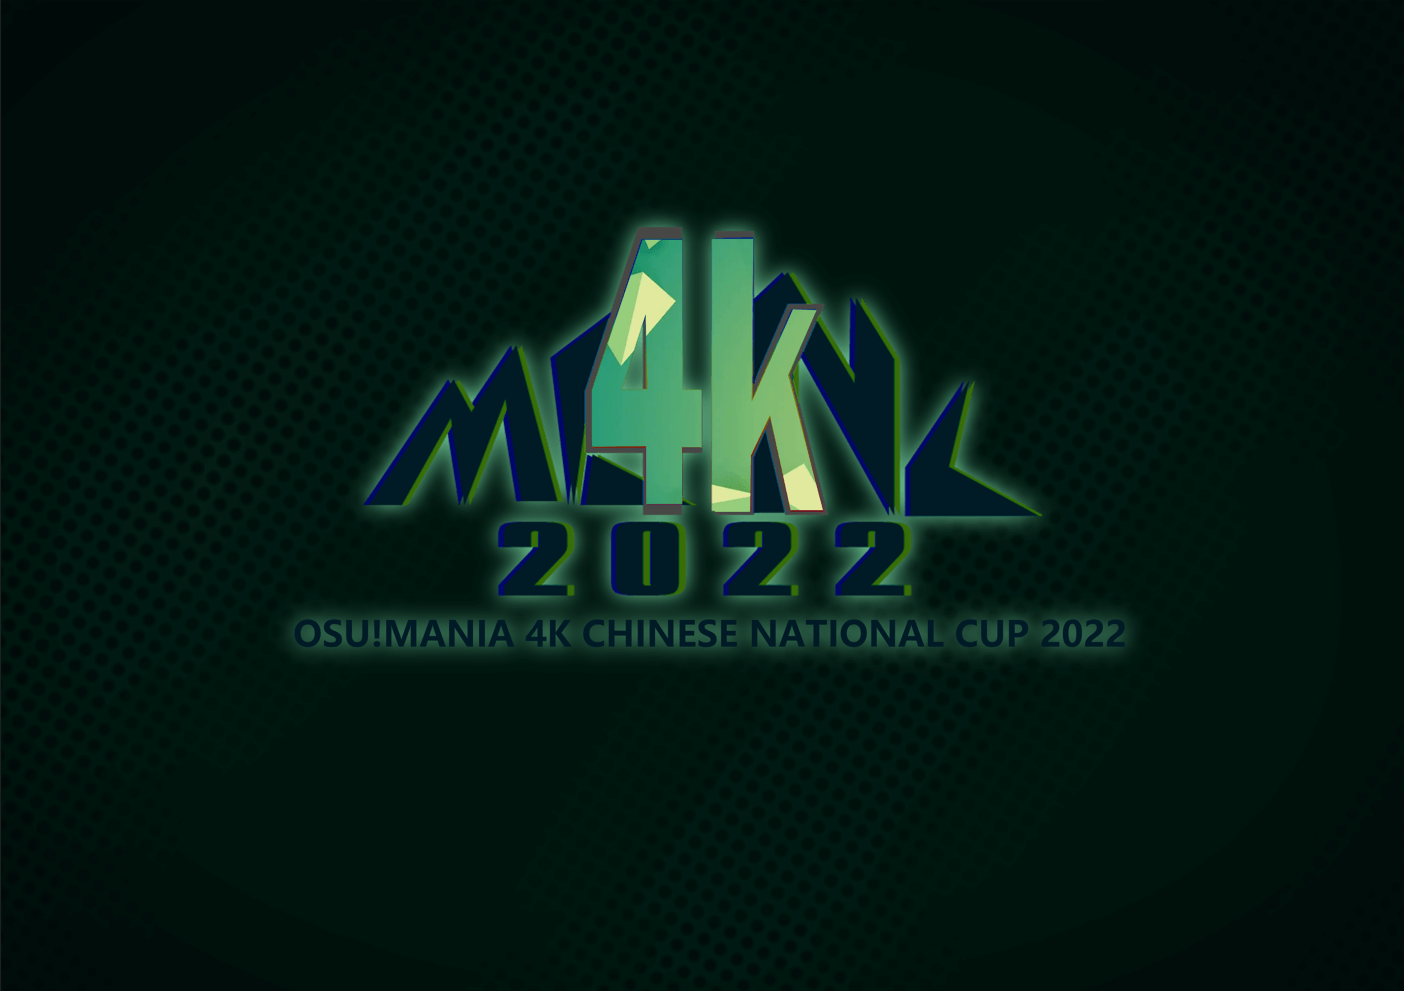 MCNC 2022 logo